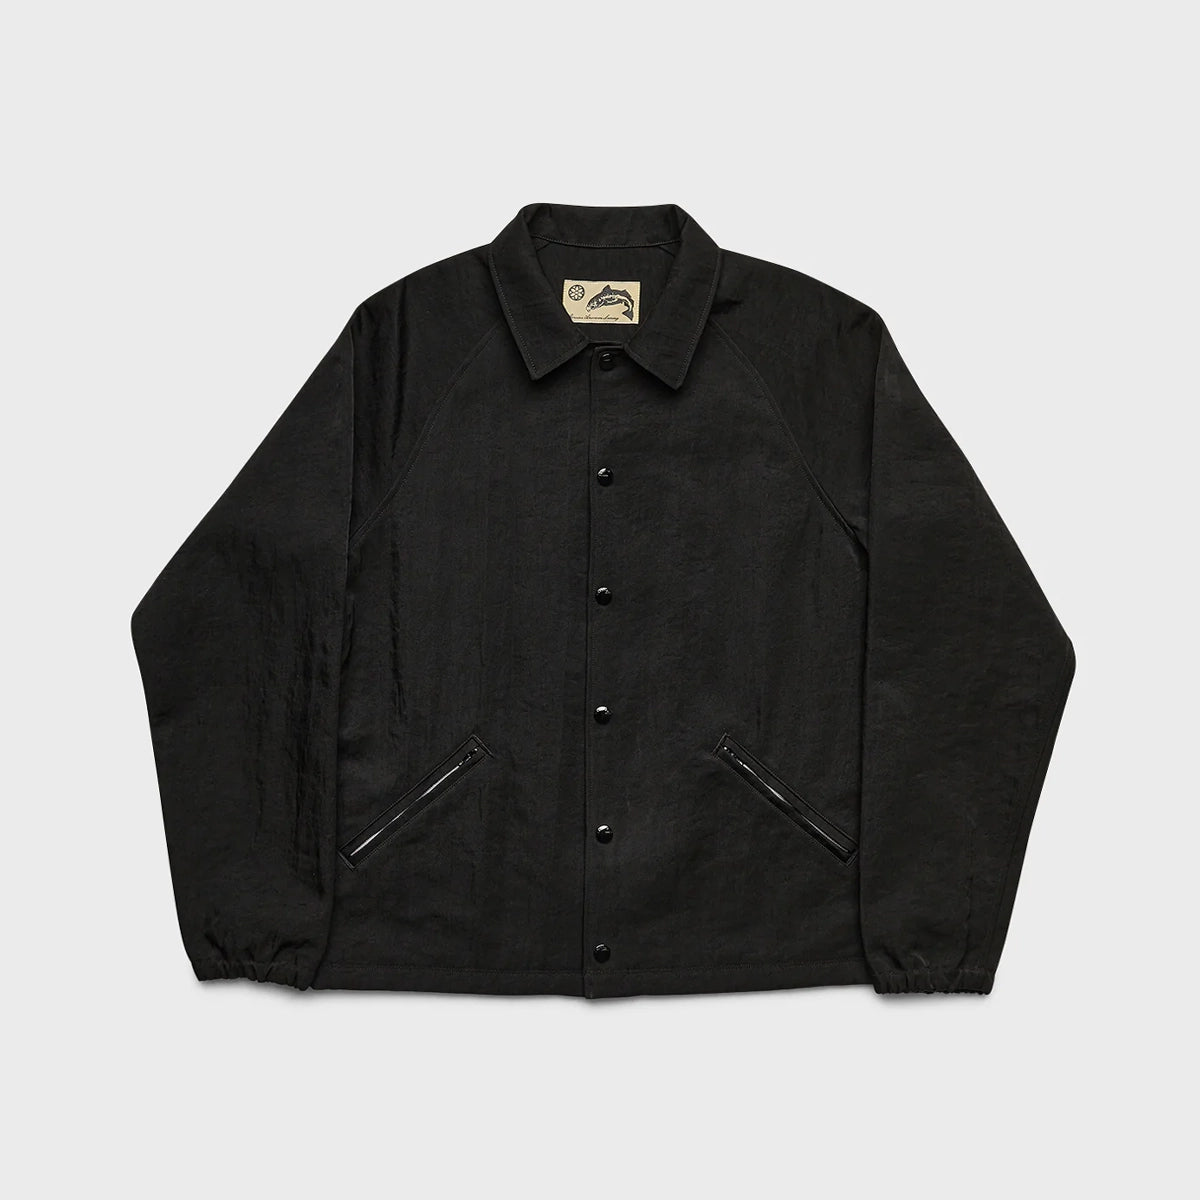 Coach’s Jacket | Black